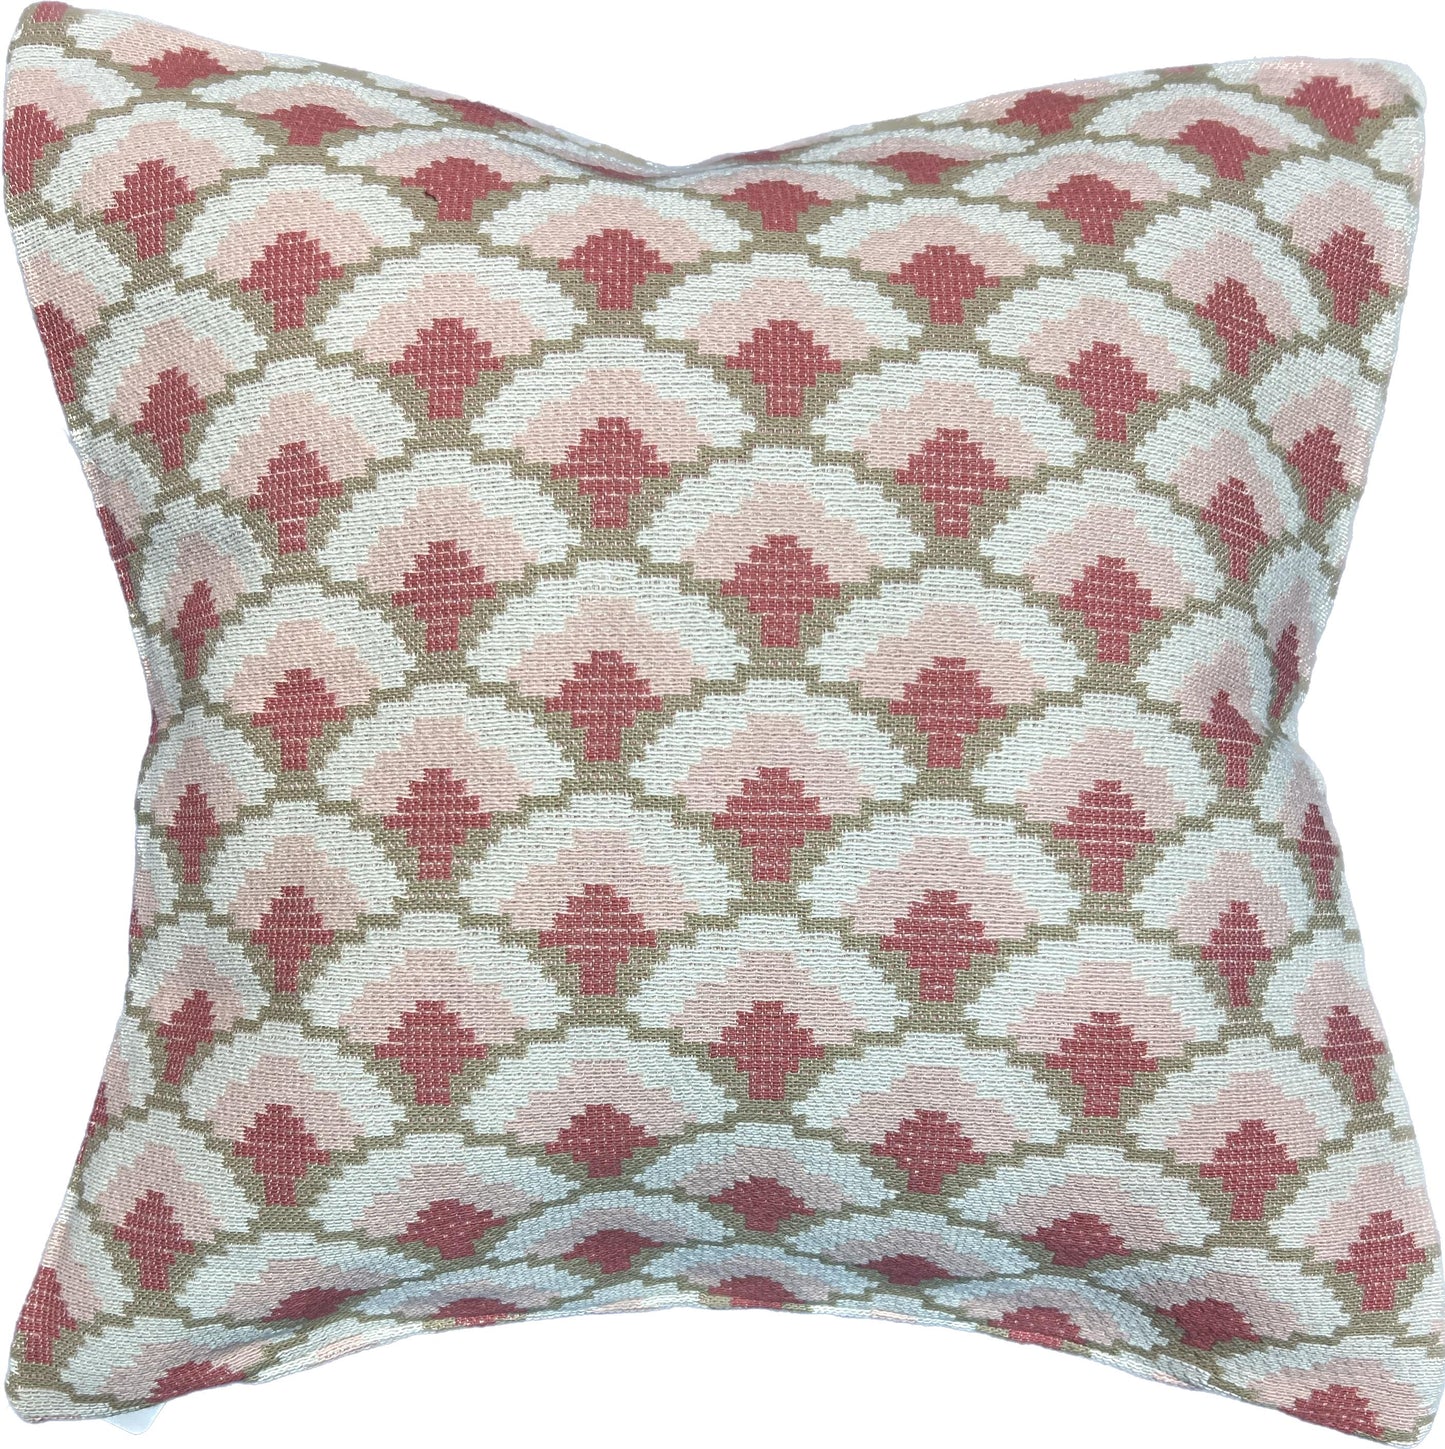 18"x18"  Fan Pillow Cover - Duralee: SU16321-122 Blossom